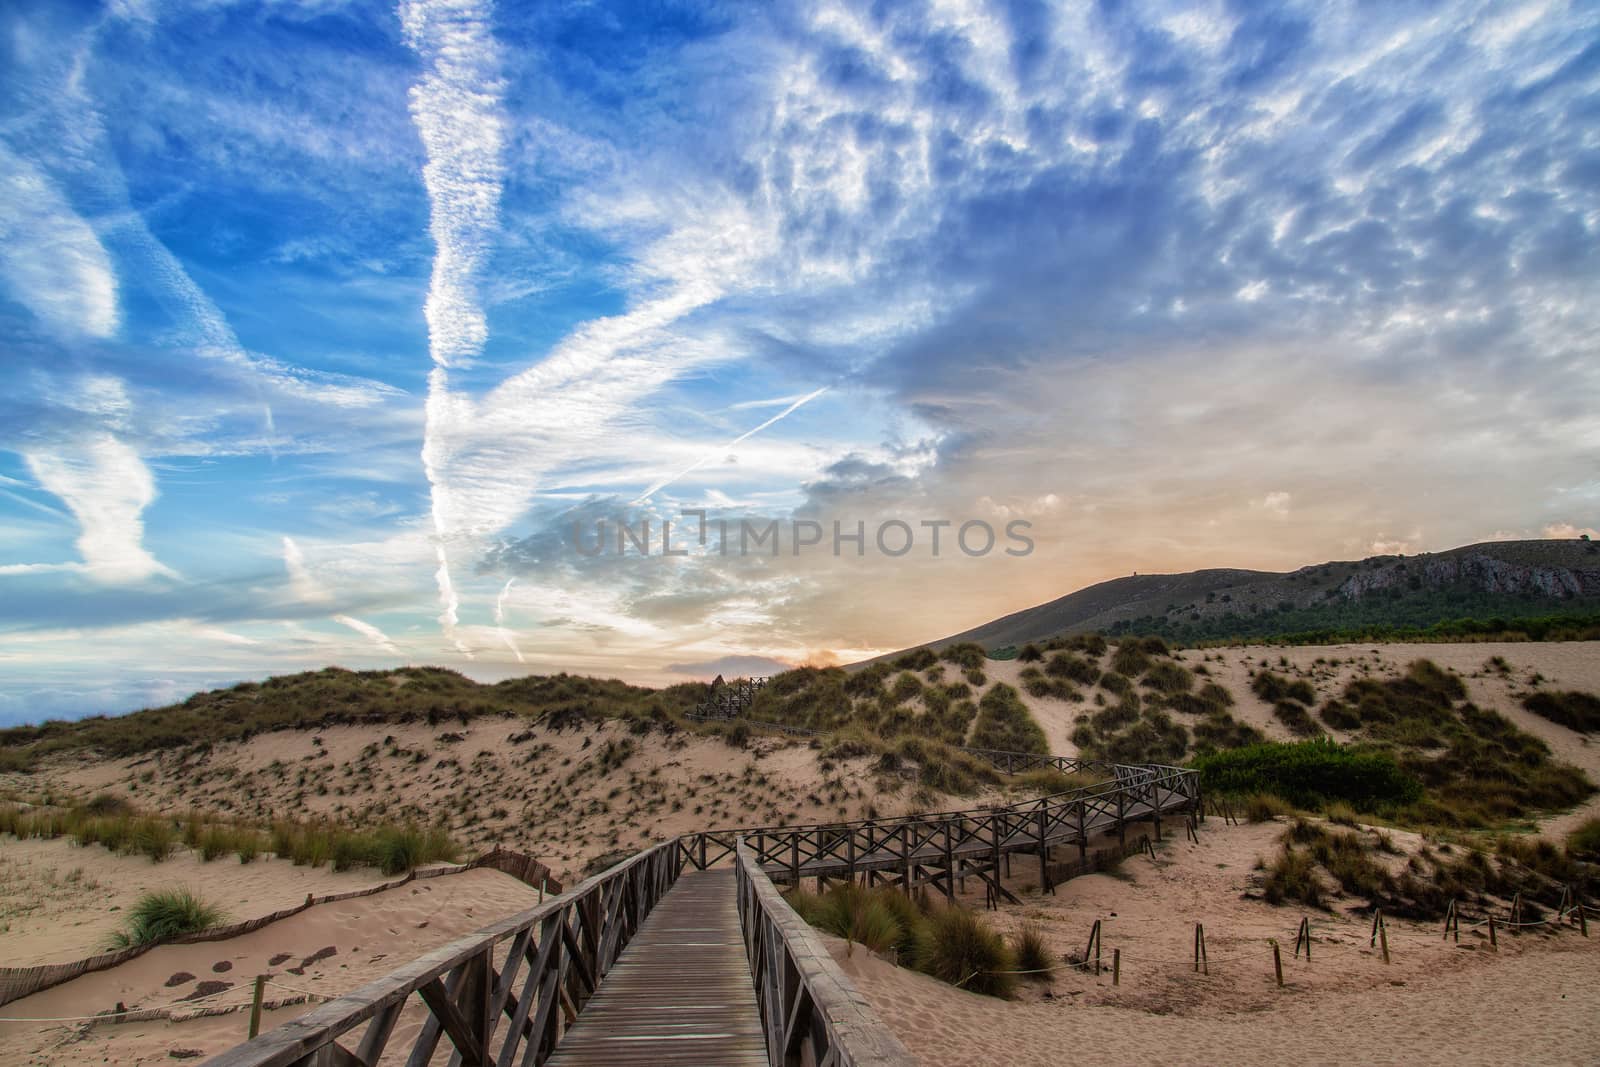 Dunes of Cala Mesquida in Mallorca with blue sky